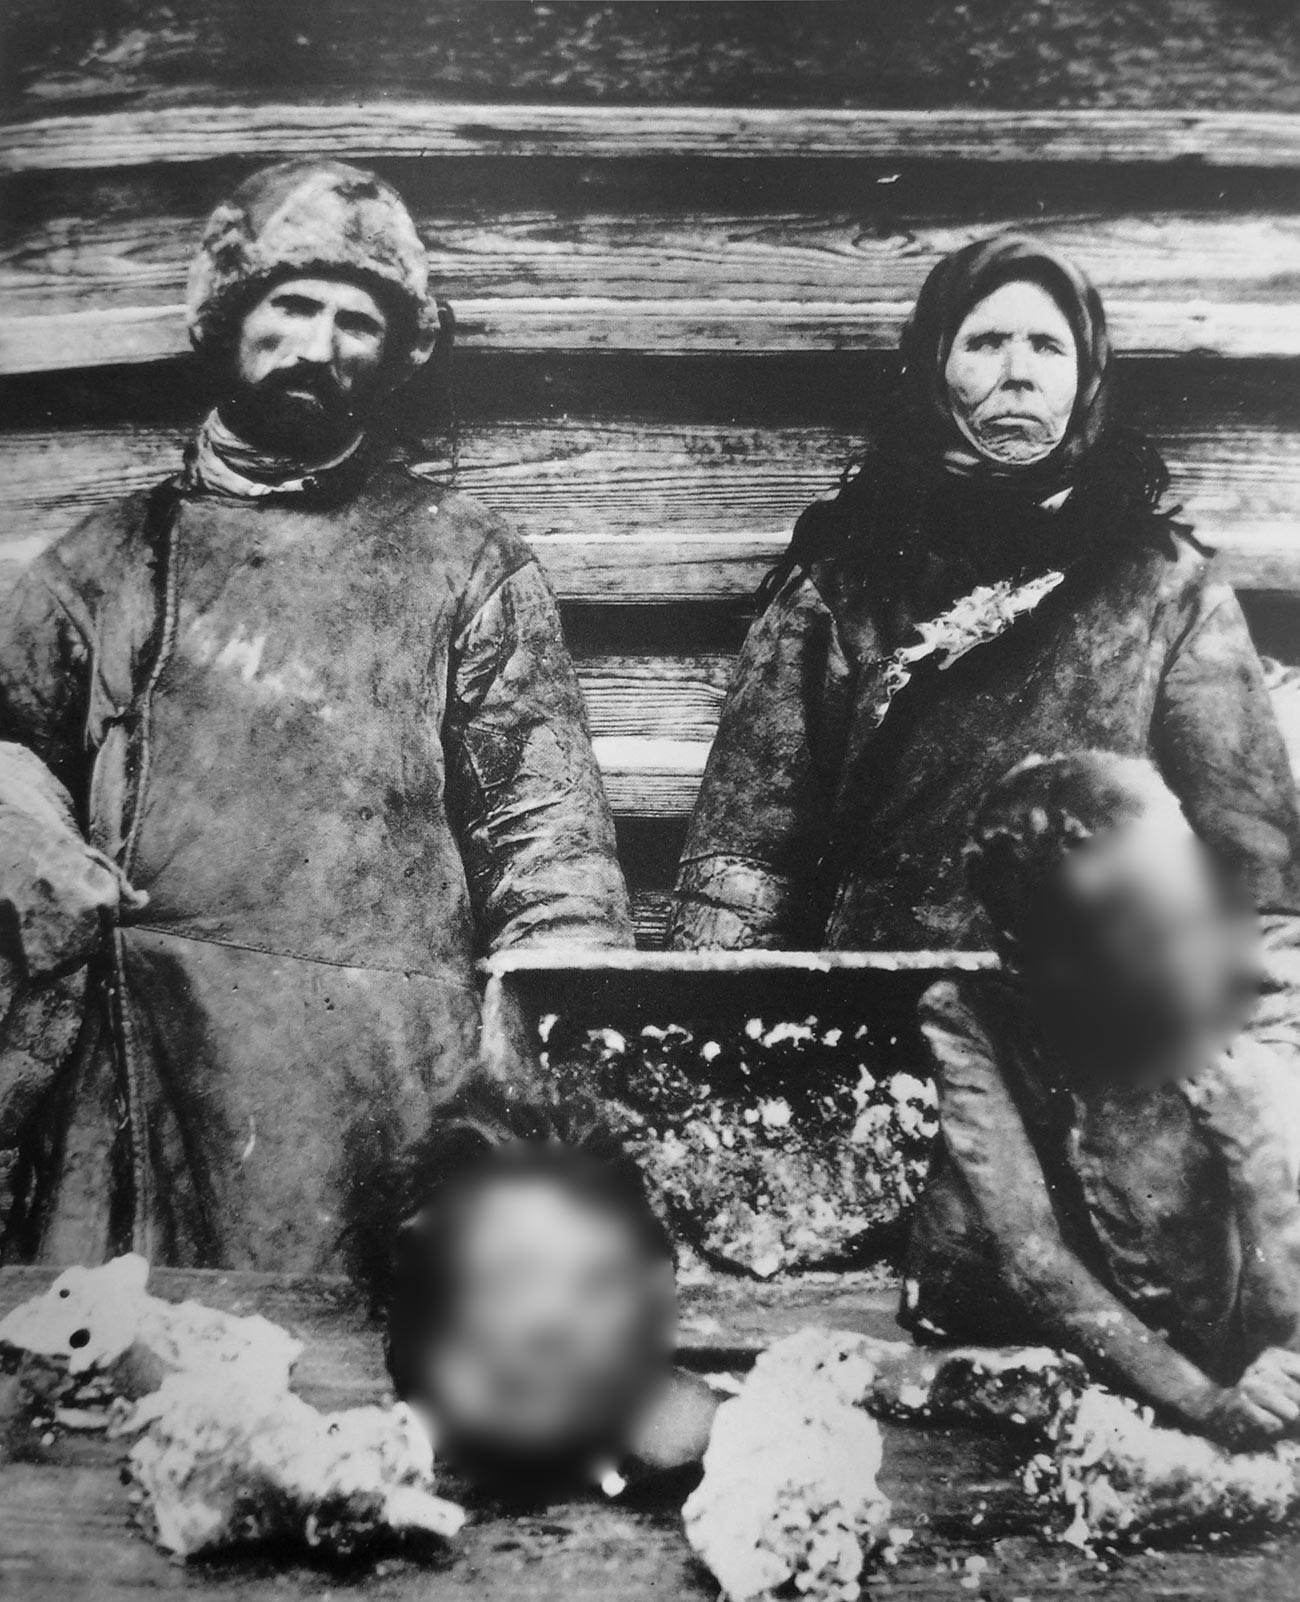 Para kanibal dengan korbannya di Samara, Povolzhye (Volga) Oblast, Rusia, 1921.